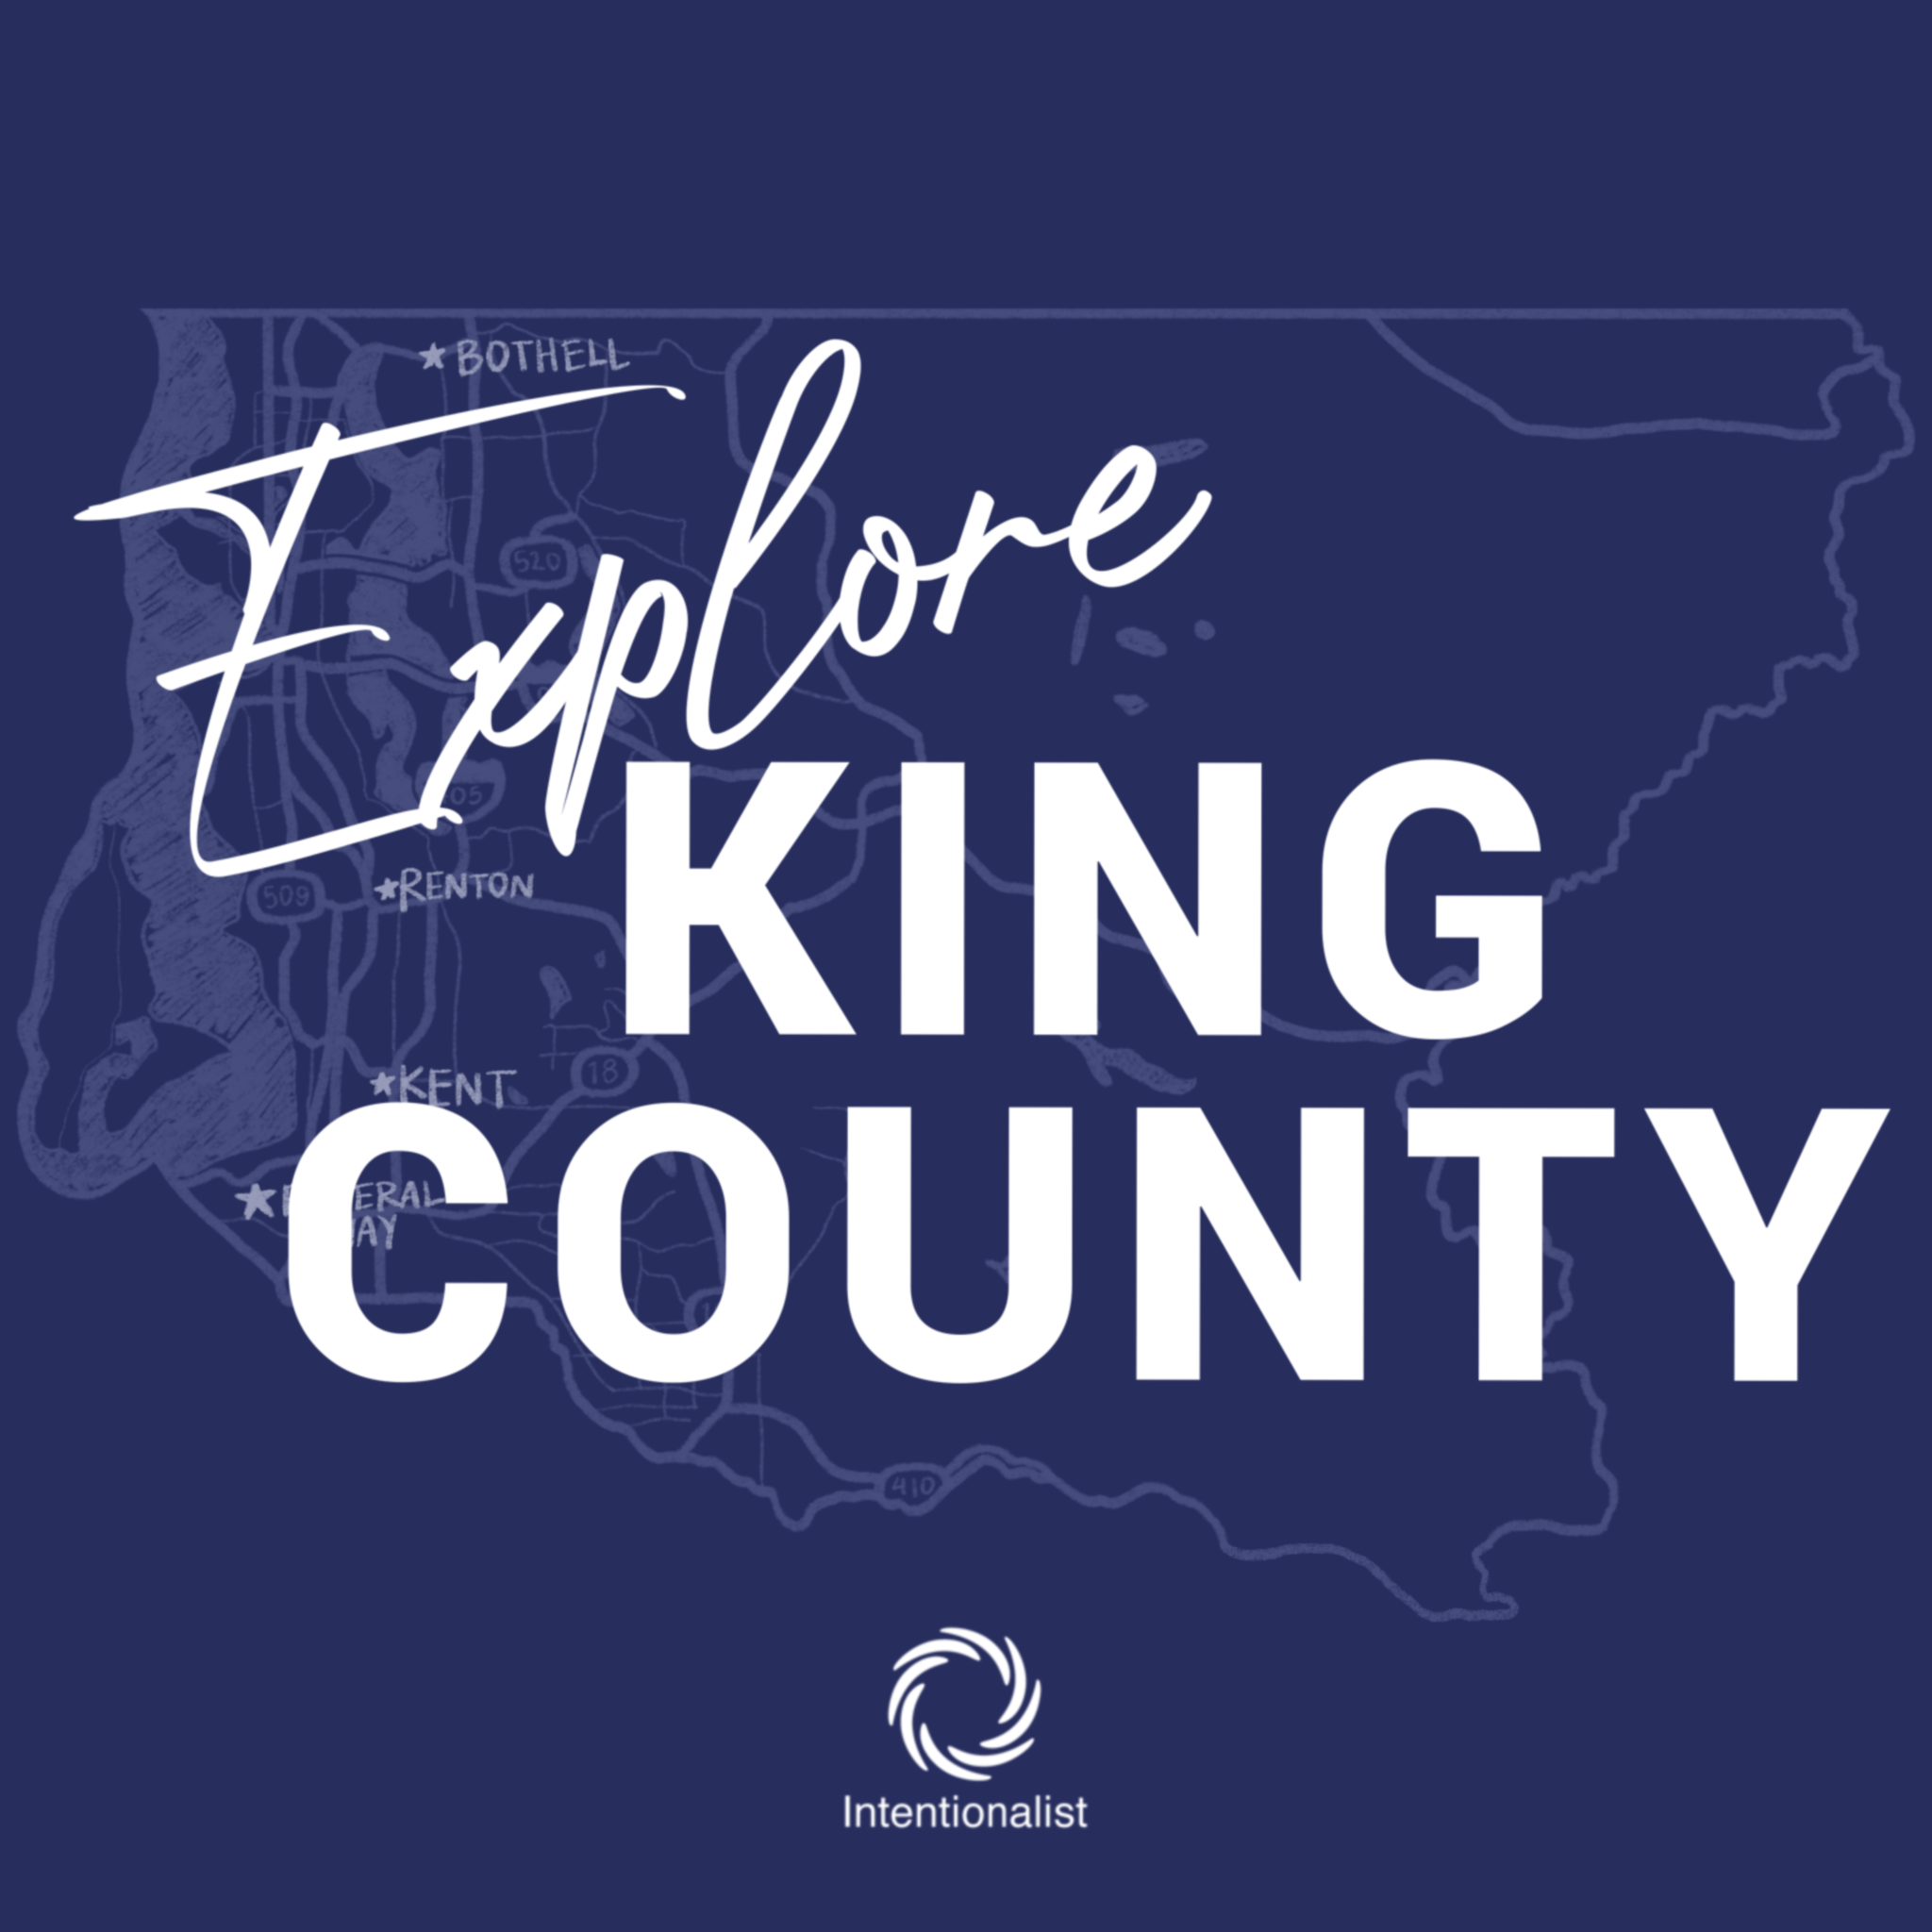 Explore King County